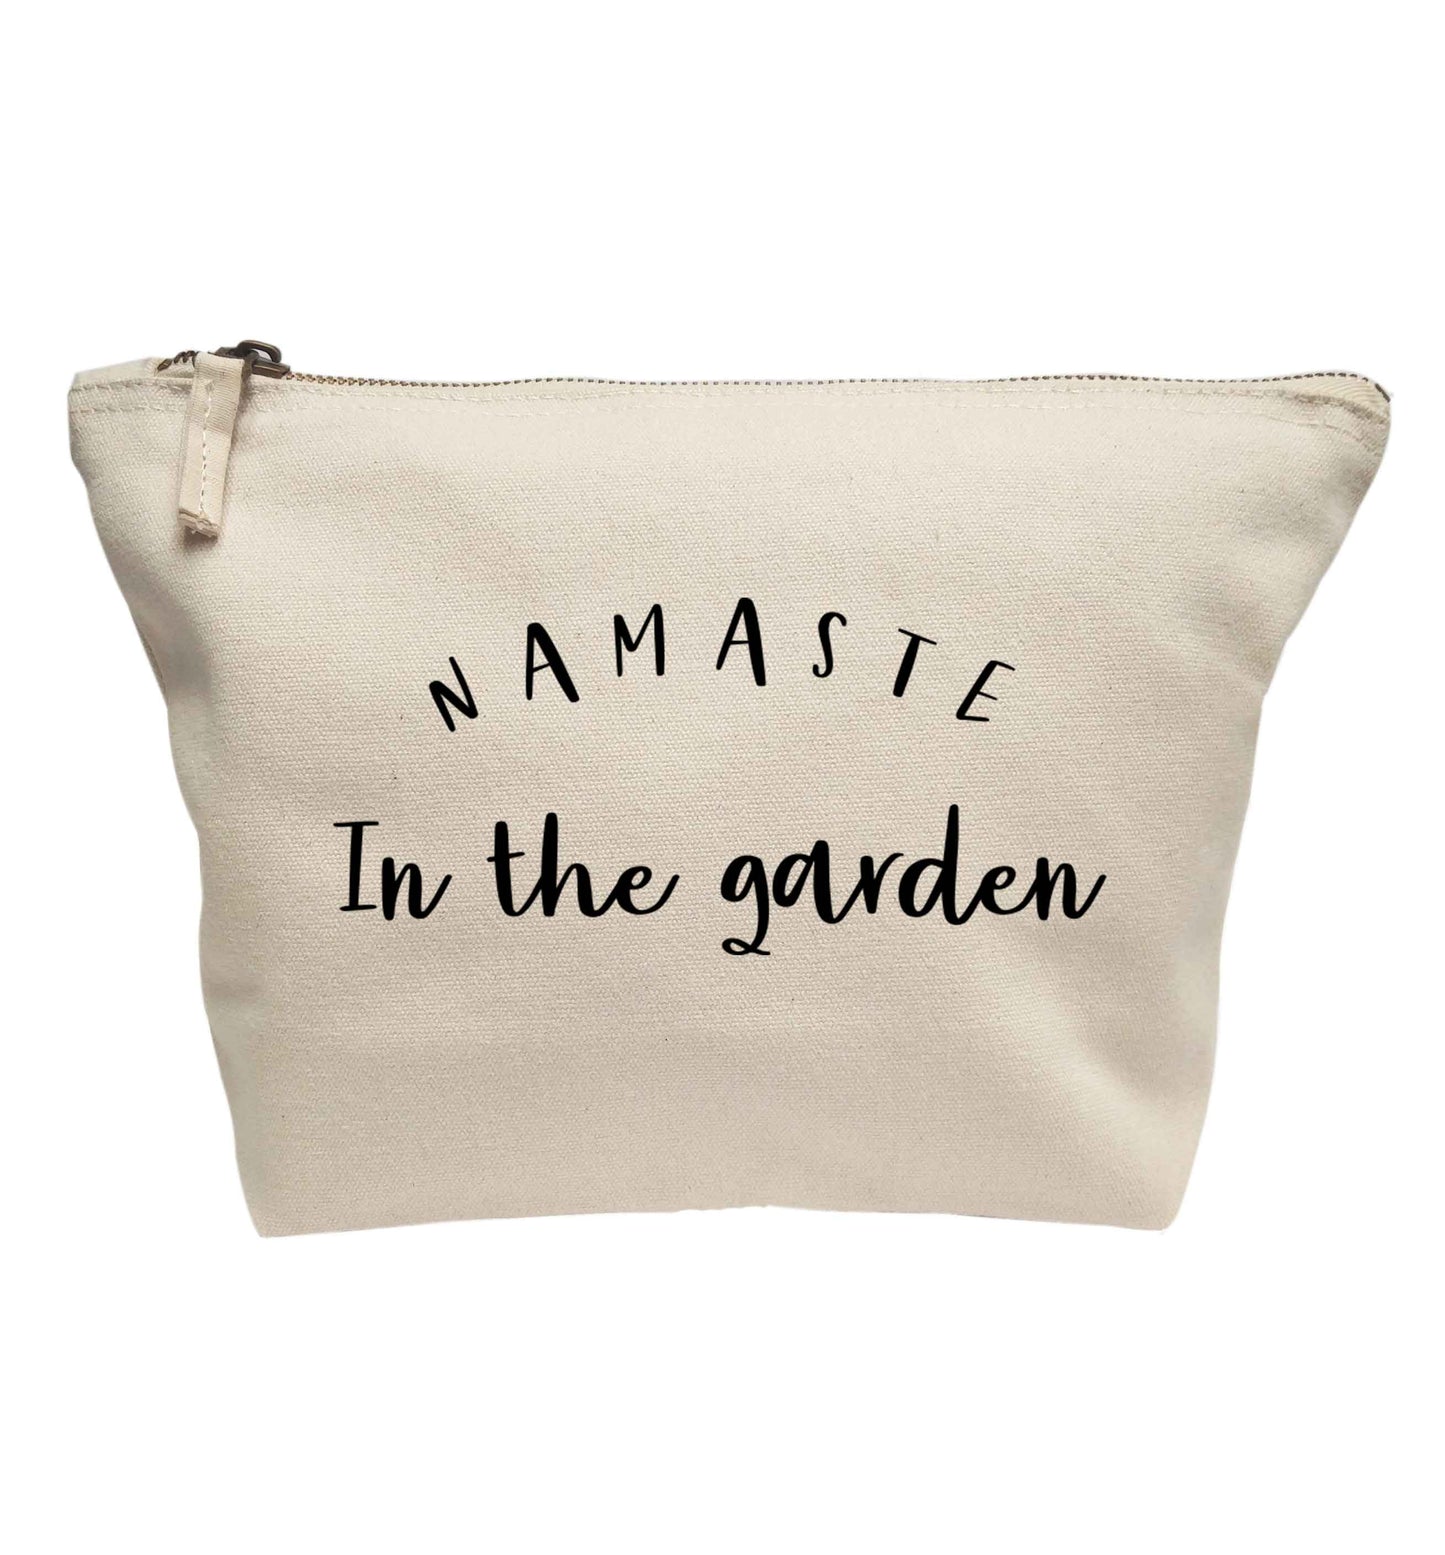 Namaste in the garden | makeup / wash bag